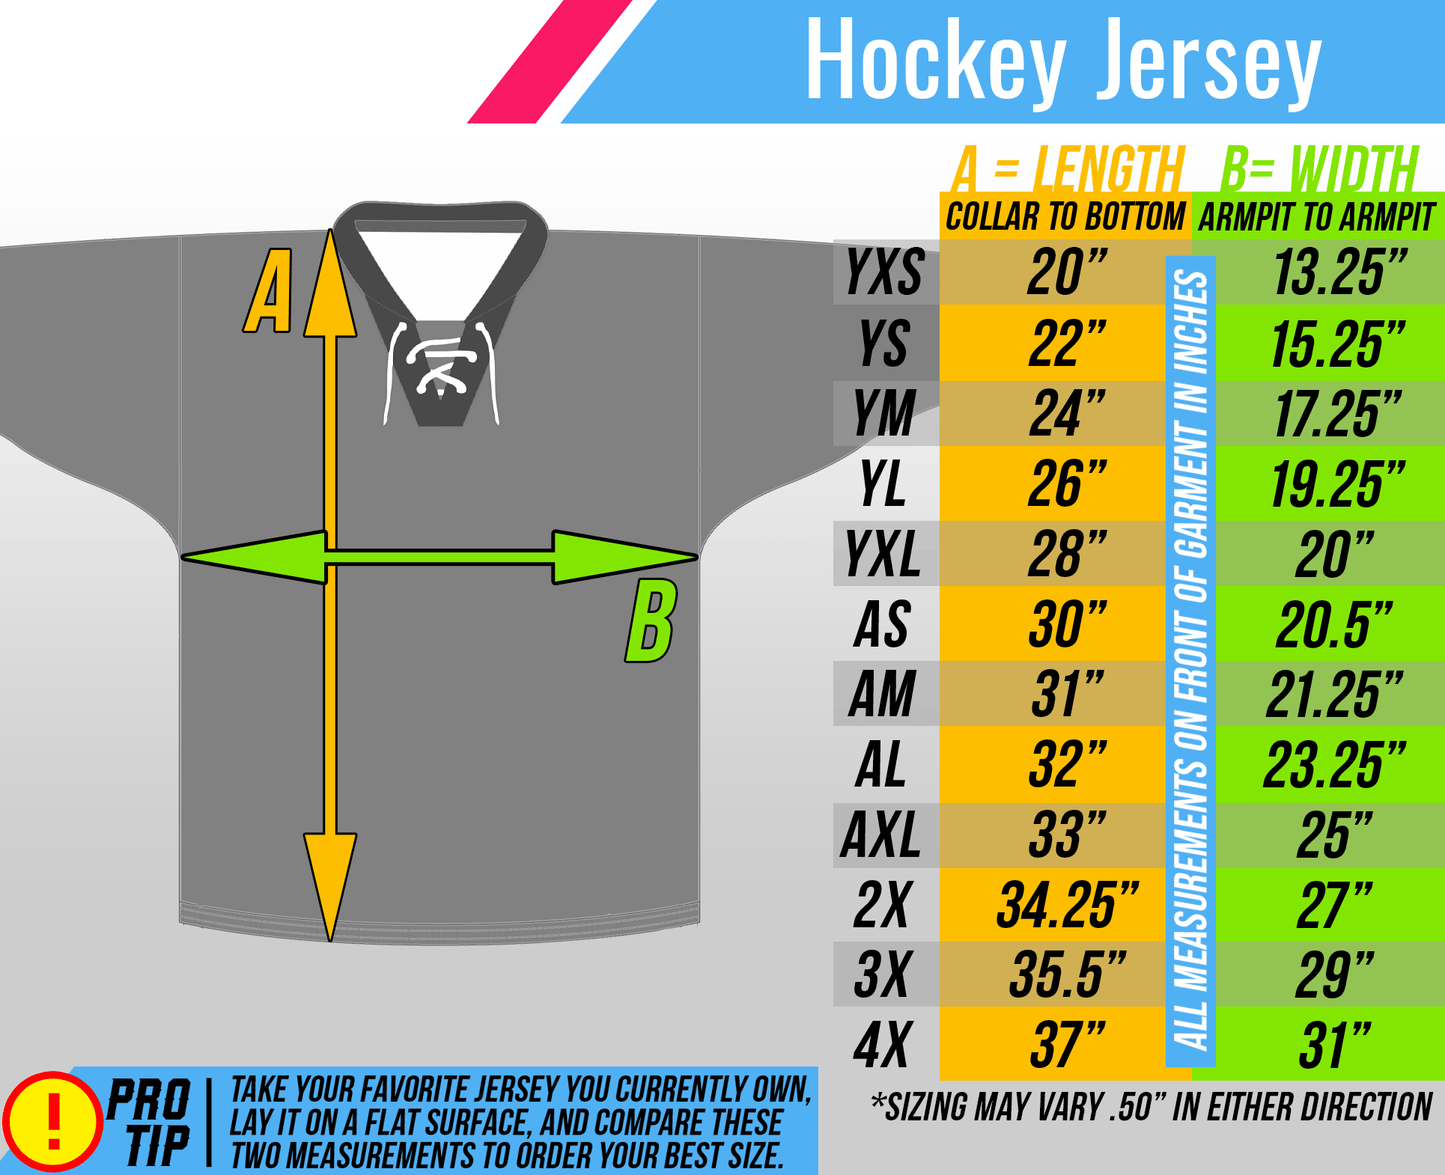 Team USA Mighty Ducks Hockey Jersey Sweater